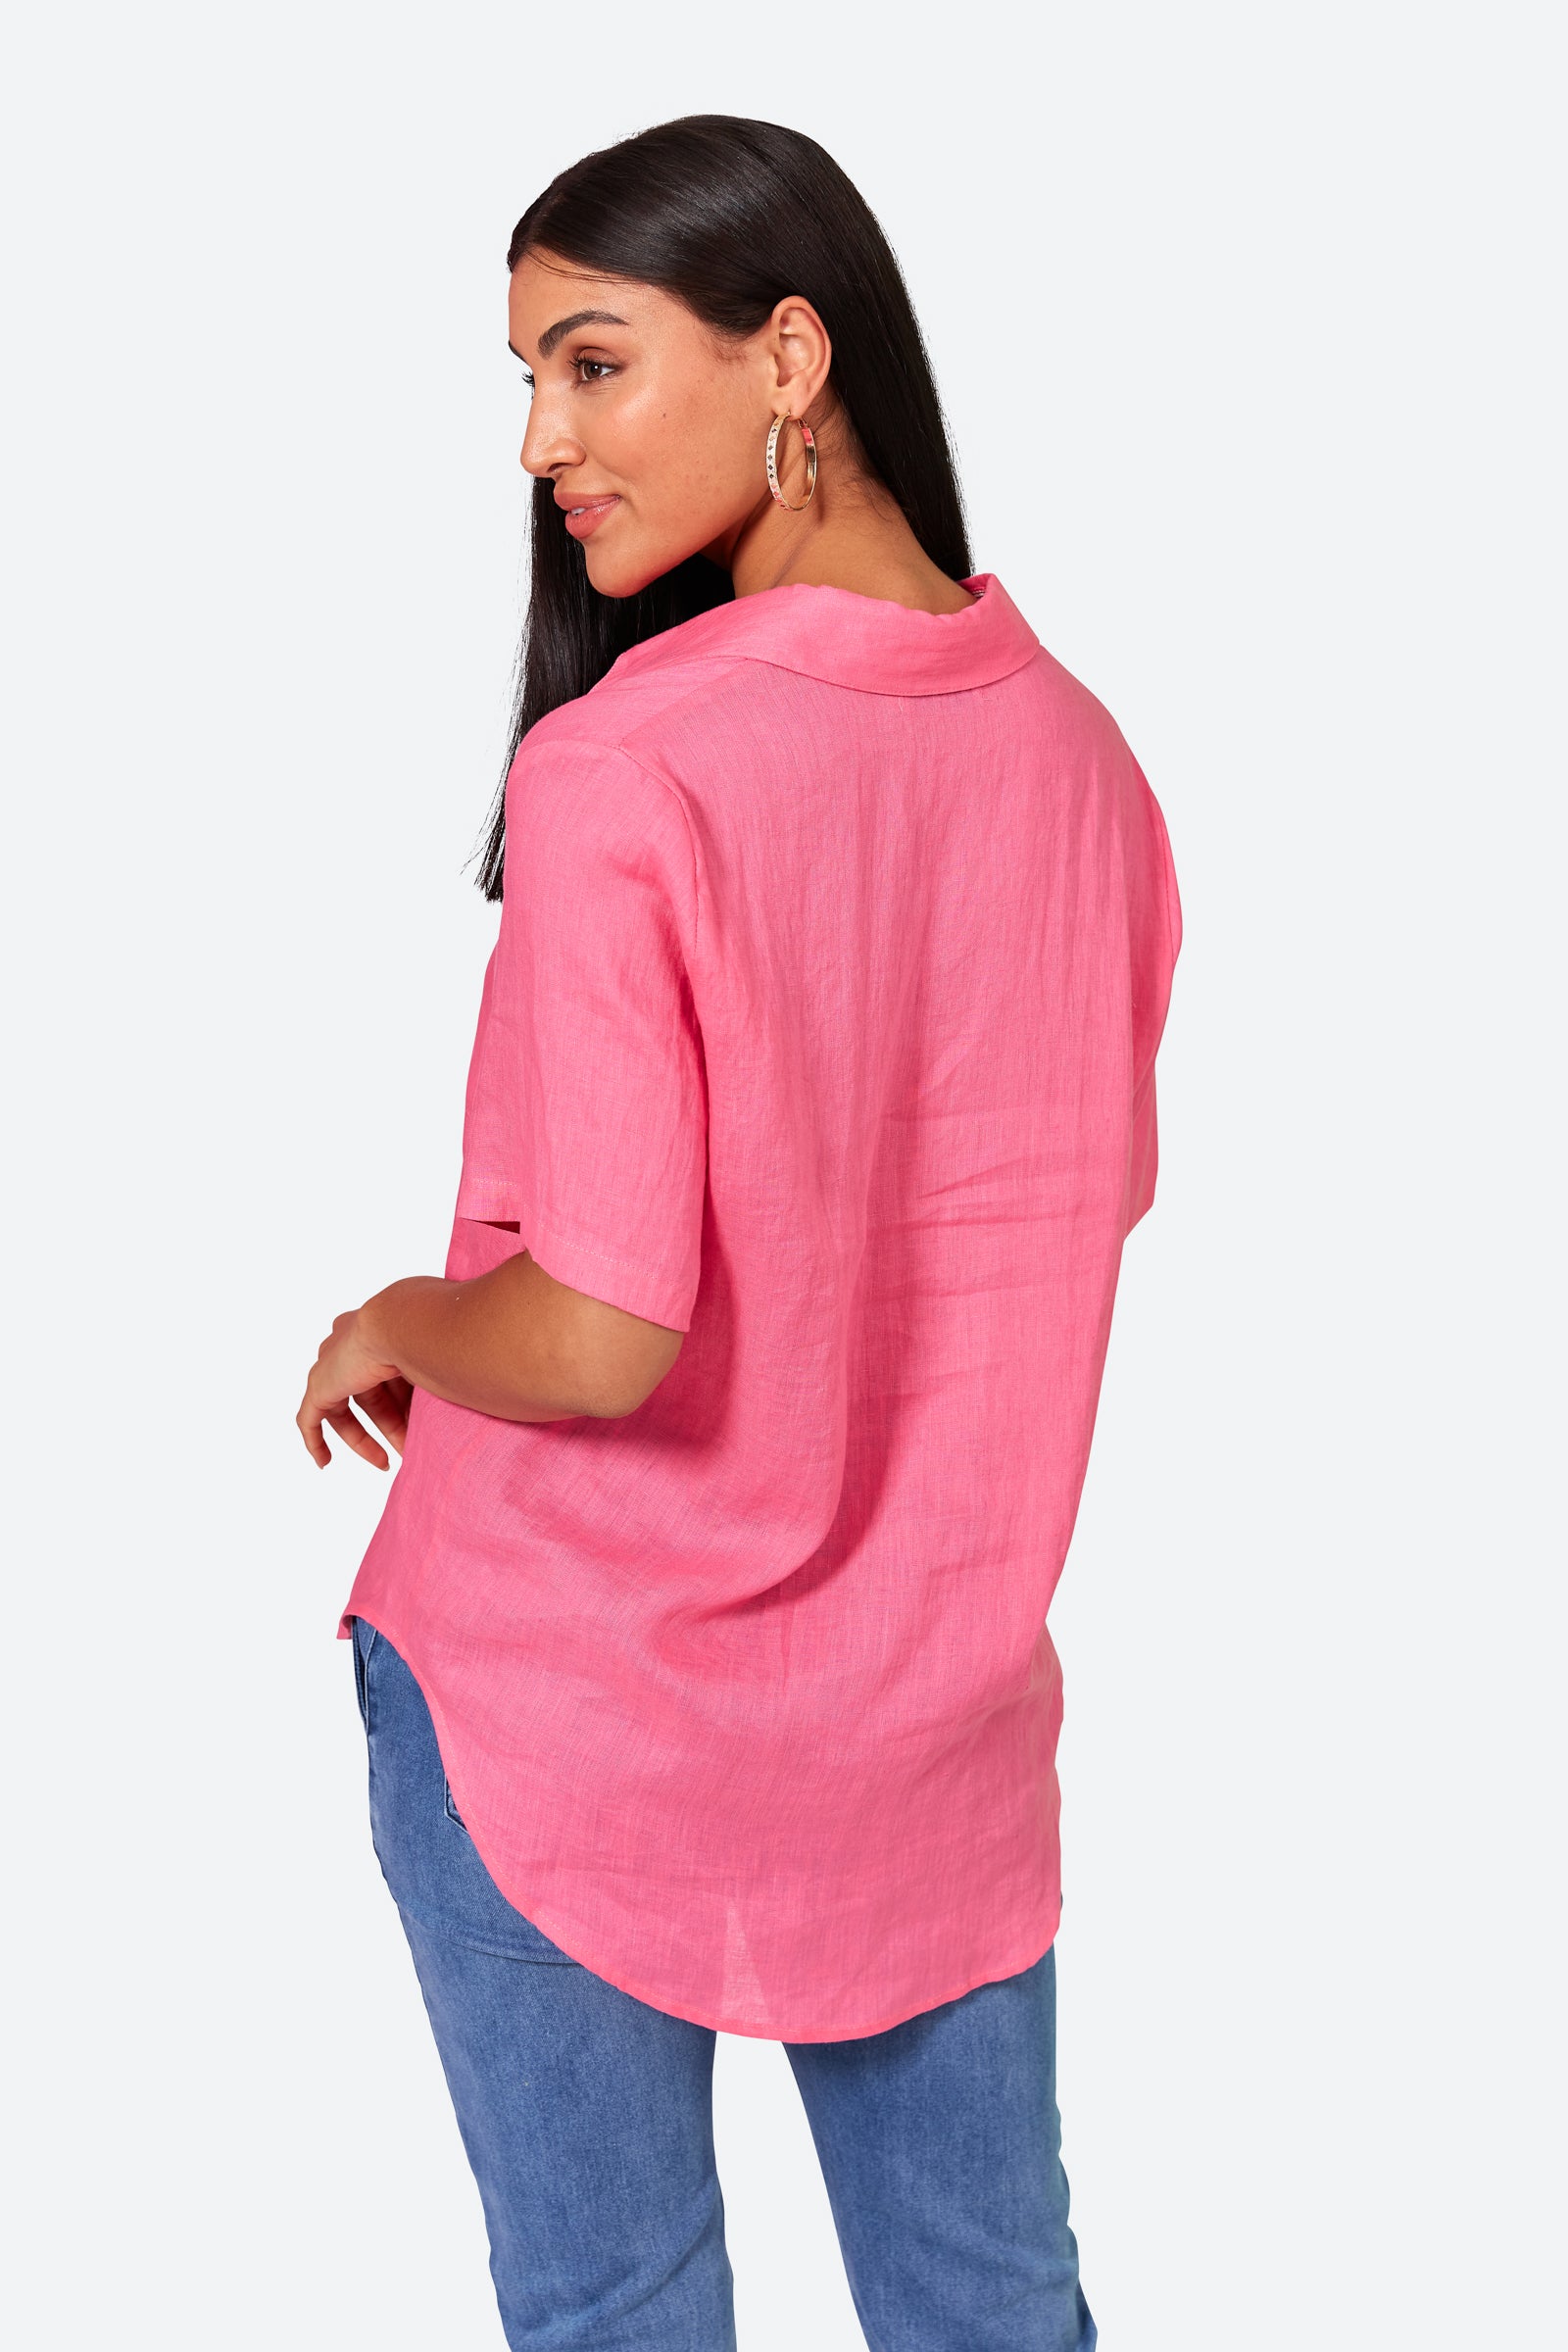 La Vie Shirt - Candy - eb&ive Clothing - Shirt S/S Linen